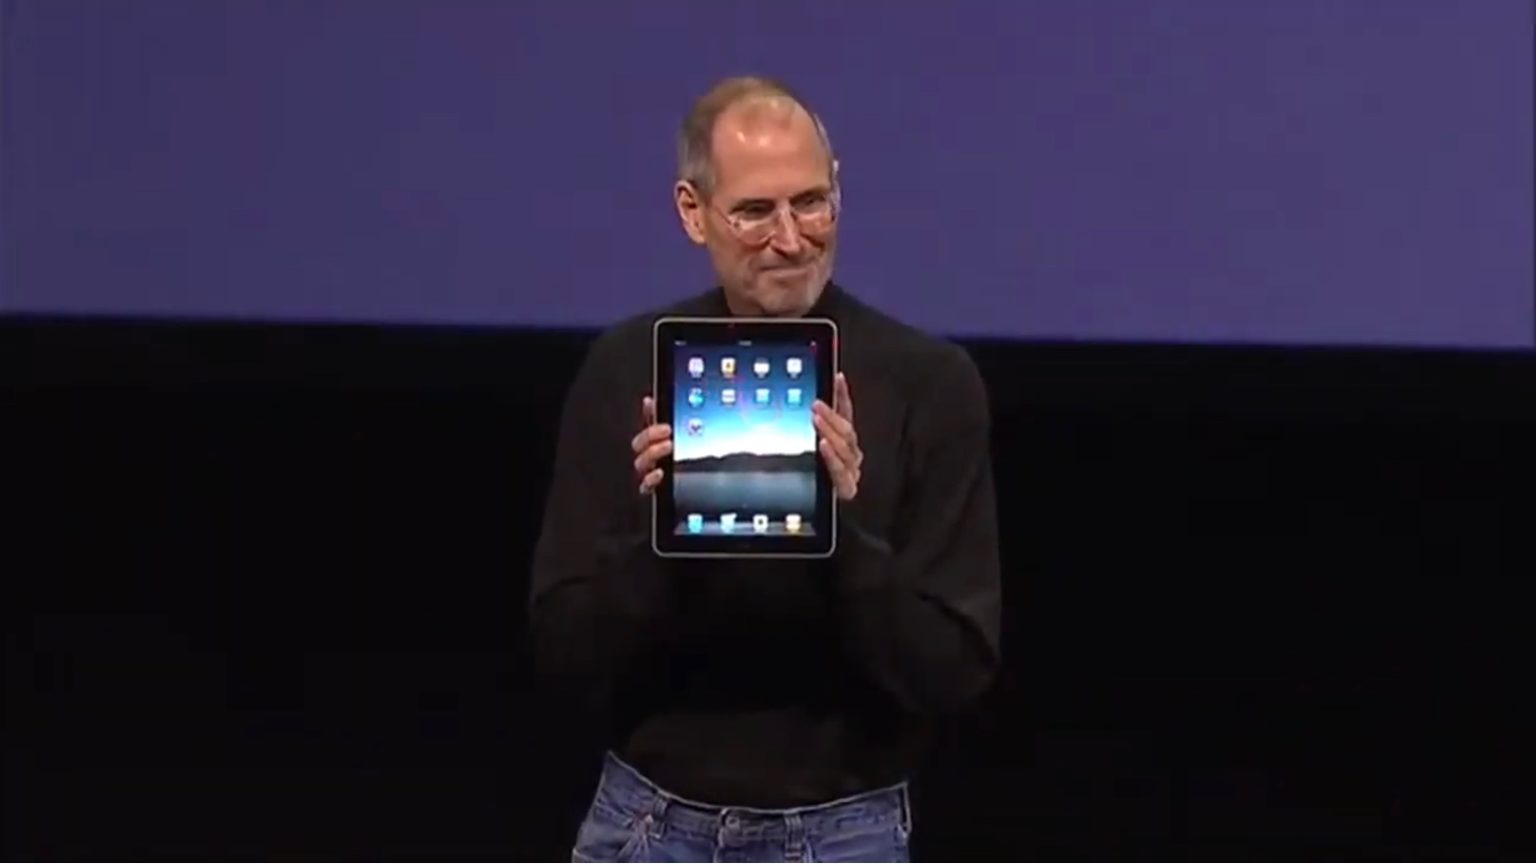 Steve Jobs with the original iPad